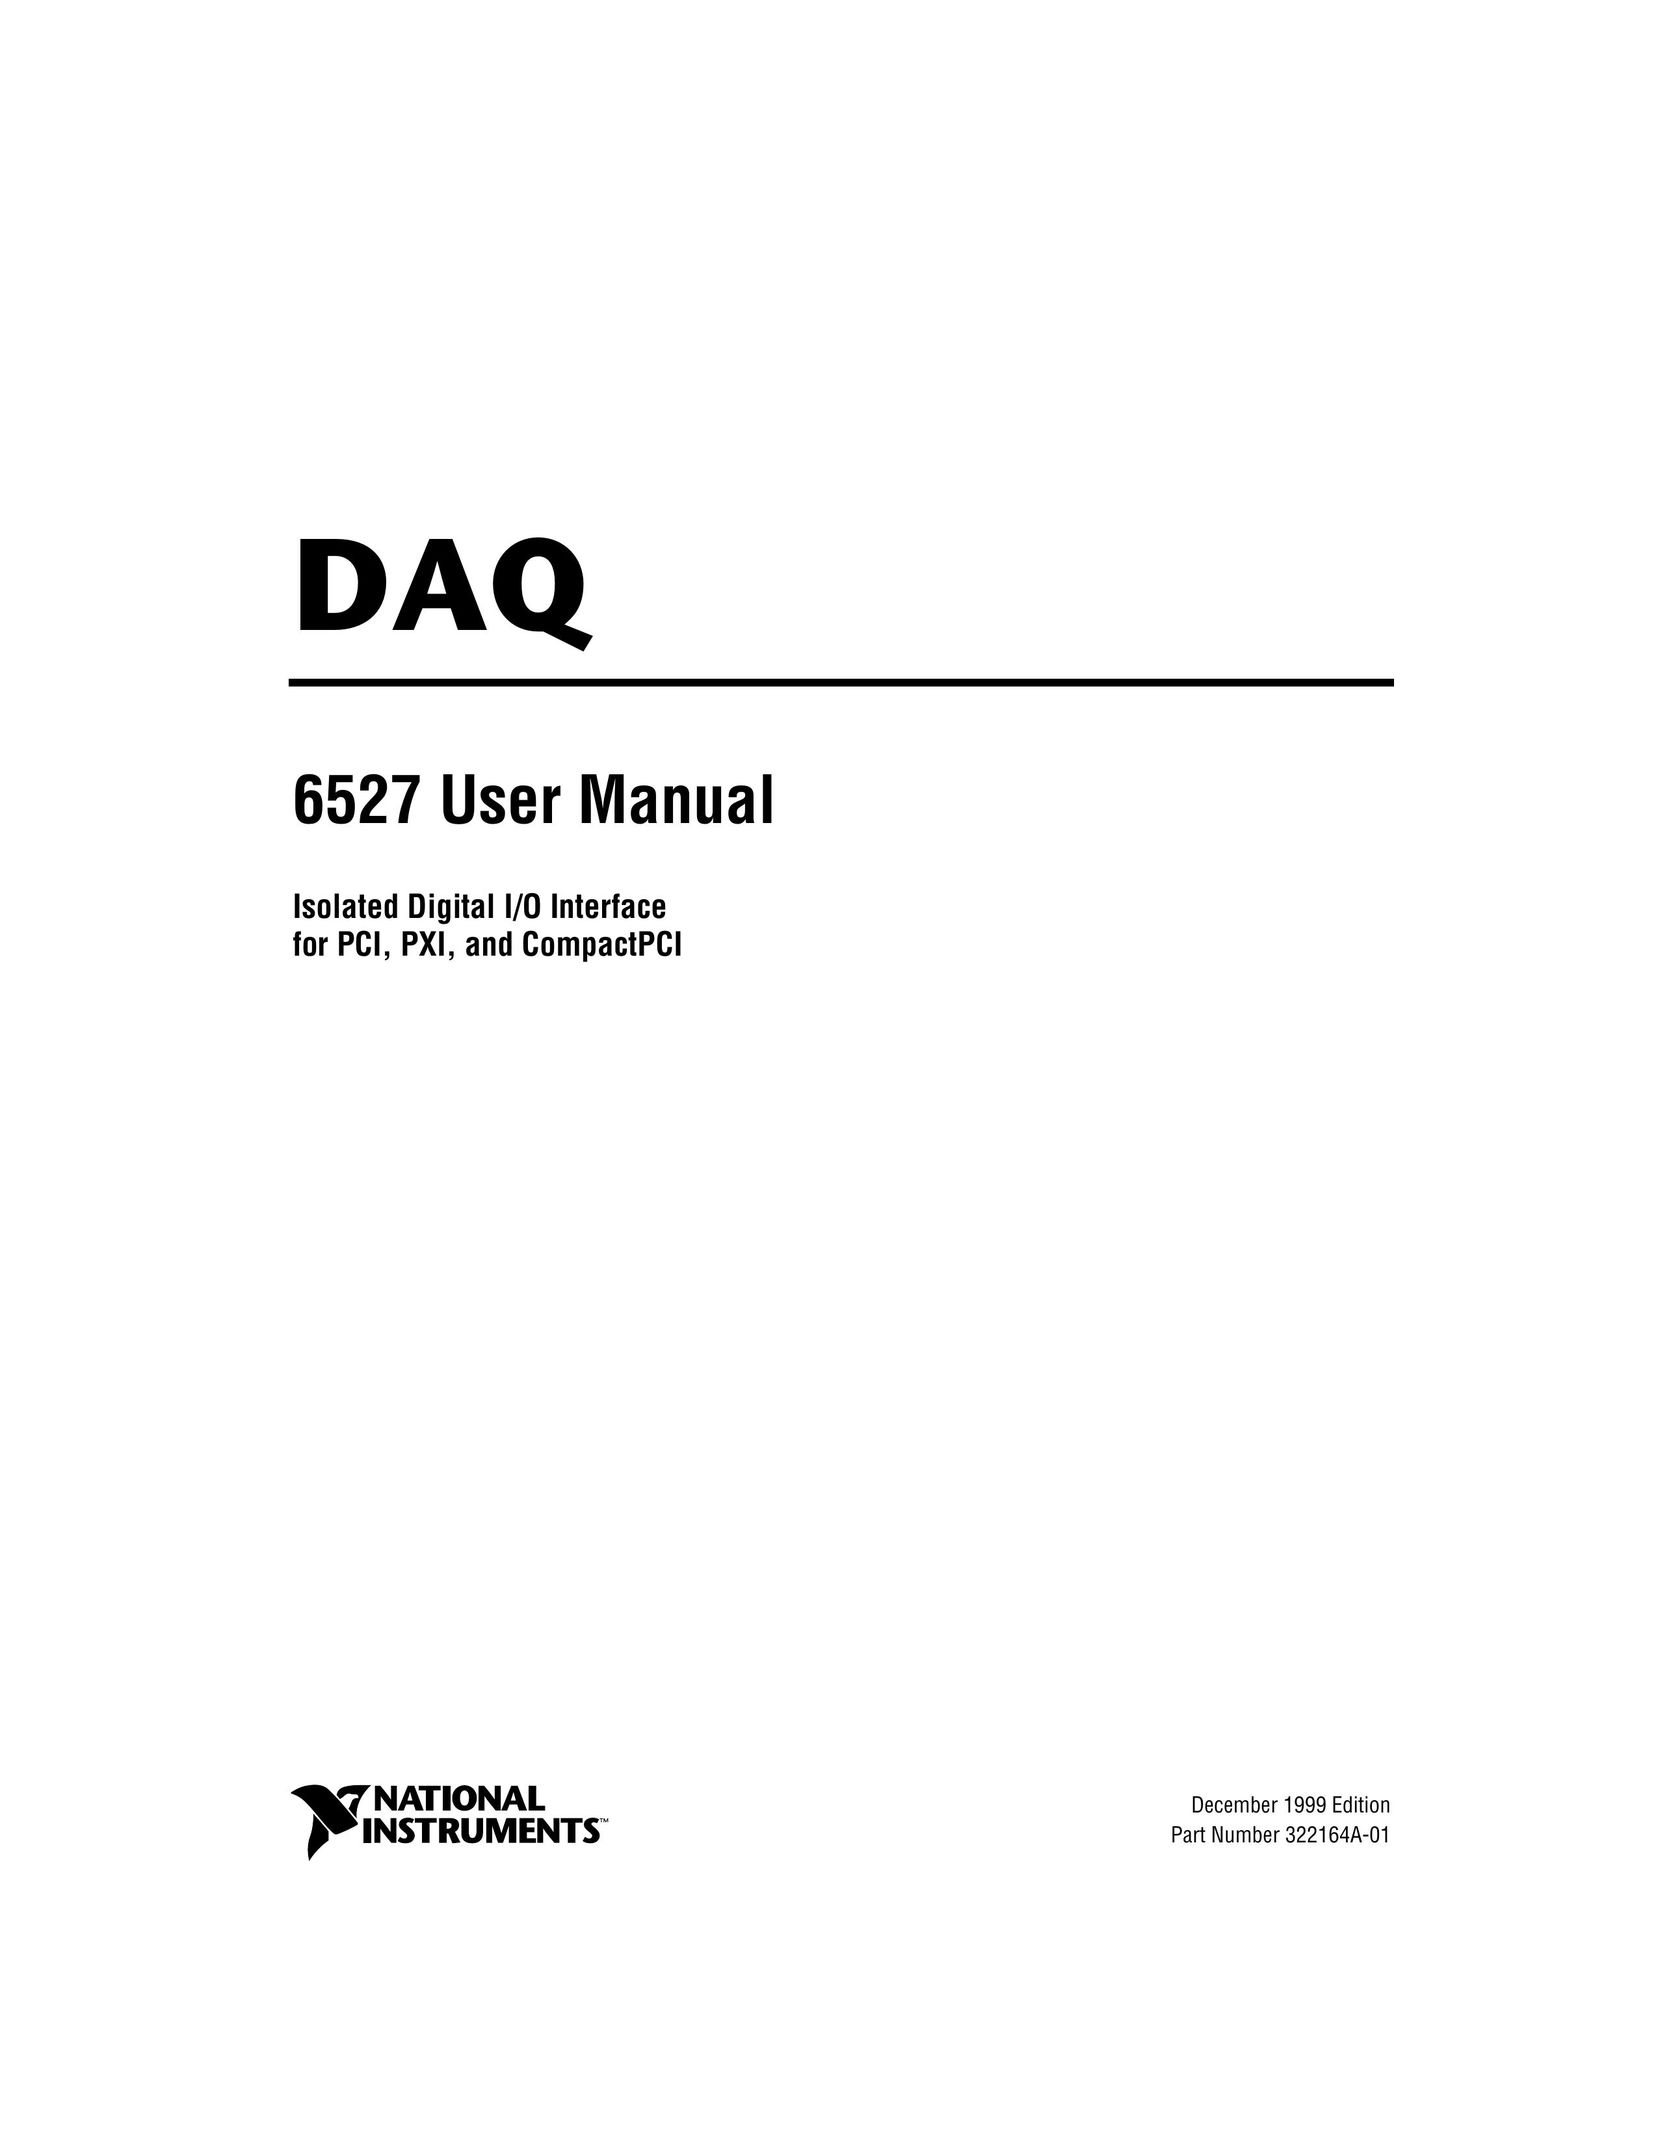 National Instruments DAQ 6527 Network Card User Manual